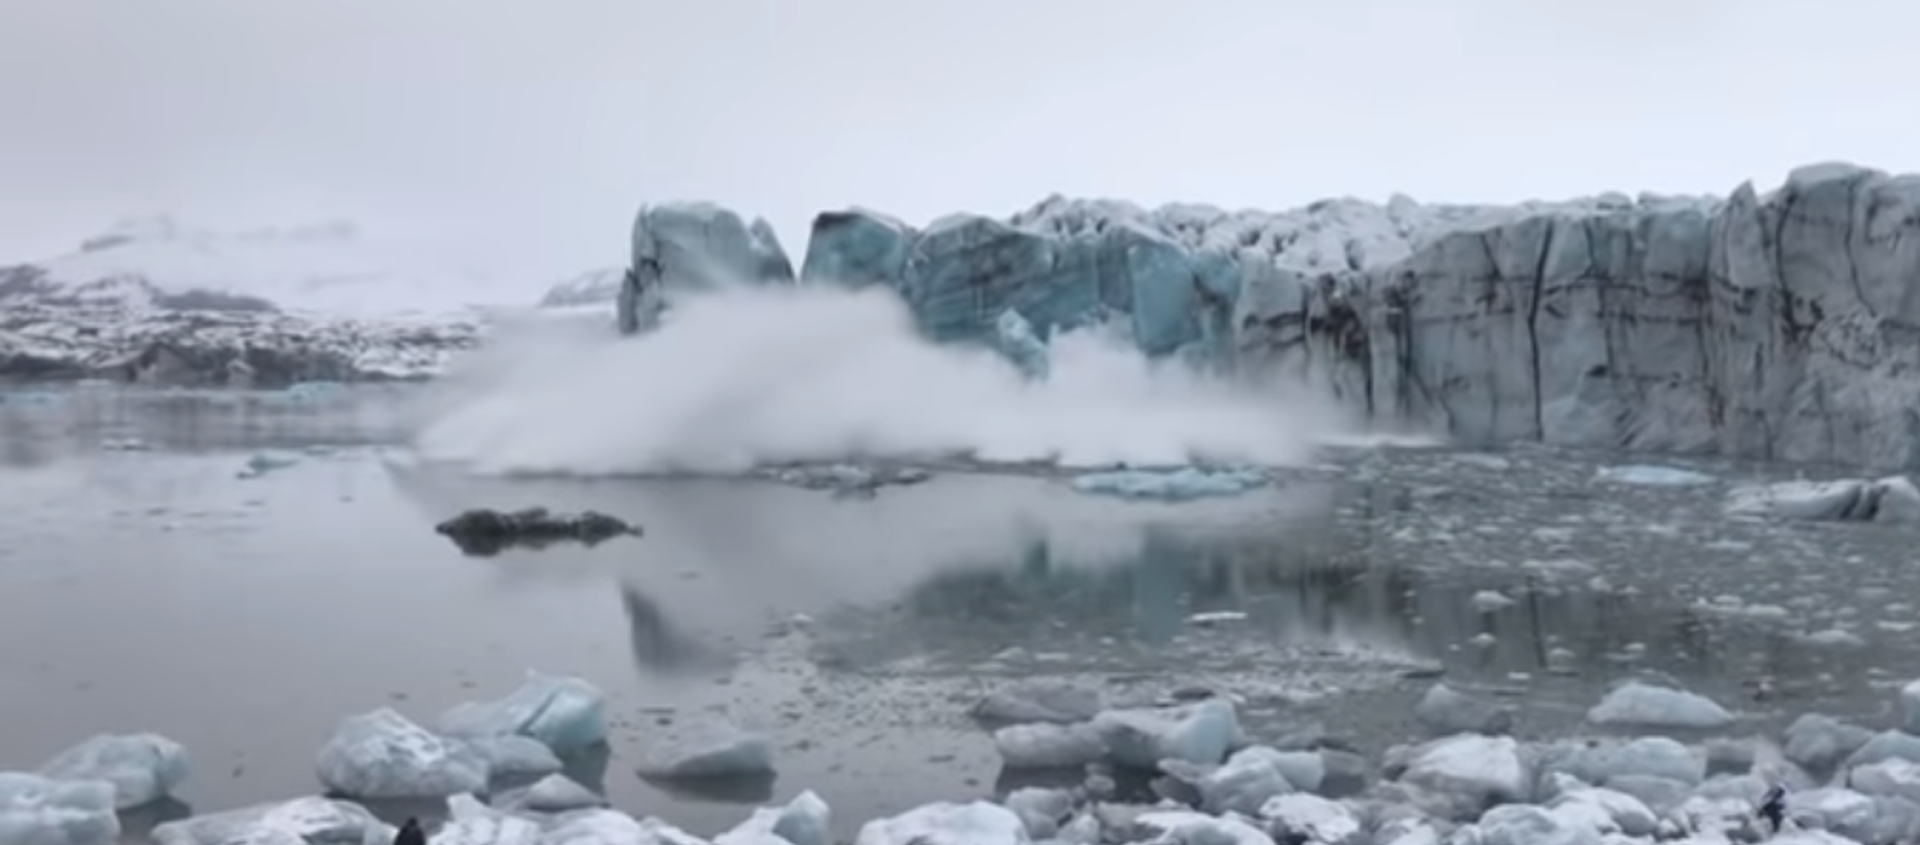 Turistas huyen en pánico tras el colapso de un enorme glaciar en Islandia - Sputnik Mundo, 1920, 02.04.2019